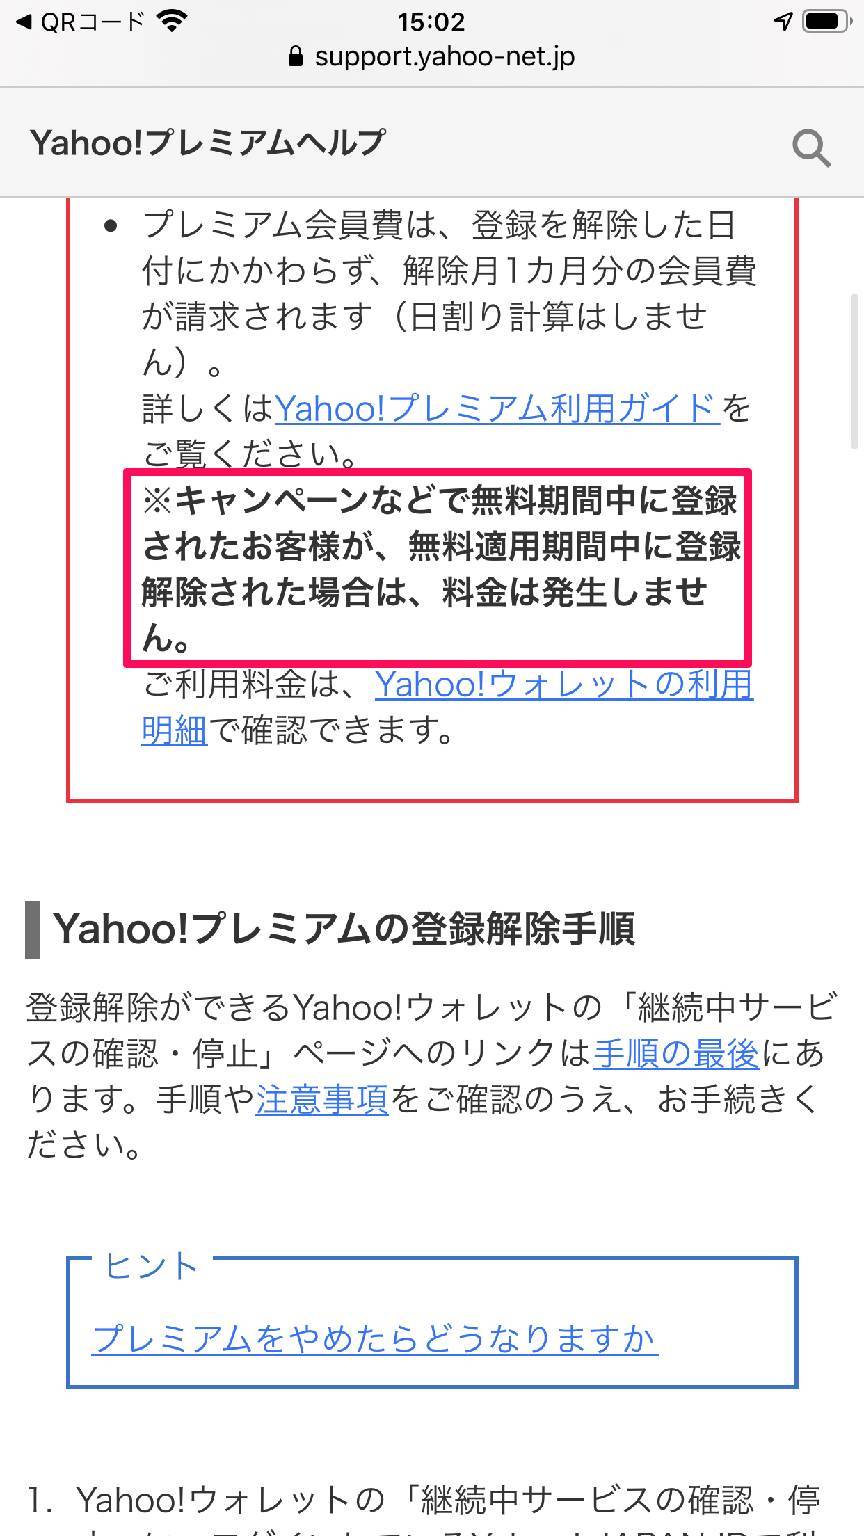 Yahoo プレミアム とは ソフトバンクは無料 買い物がお得 雑誌も読み放題 Appliv Topics